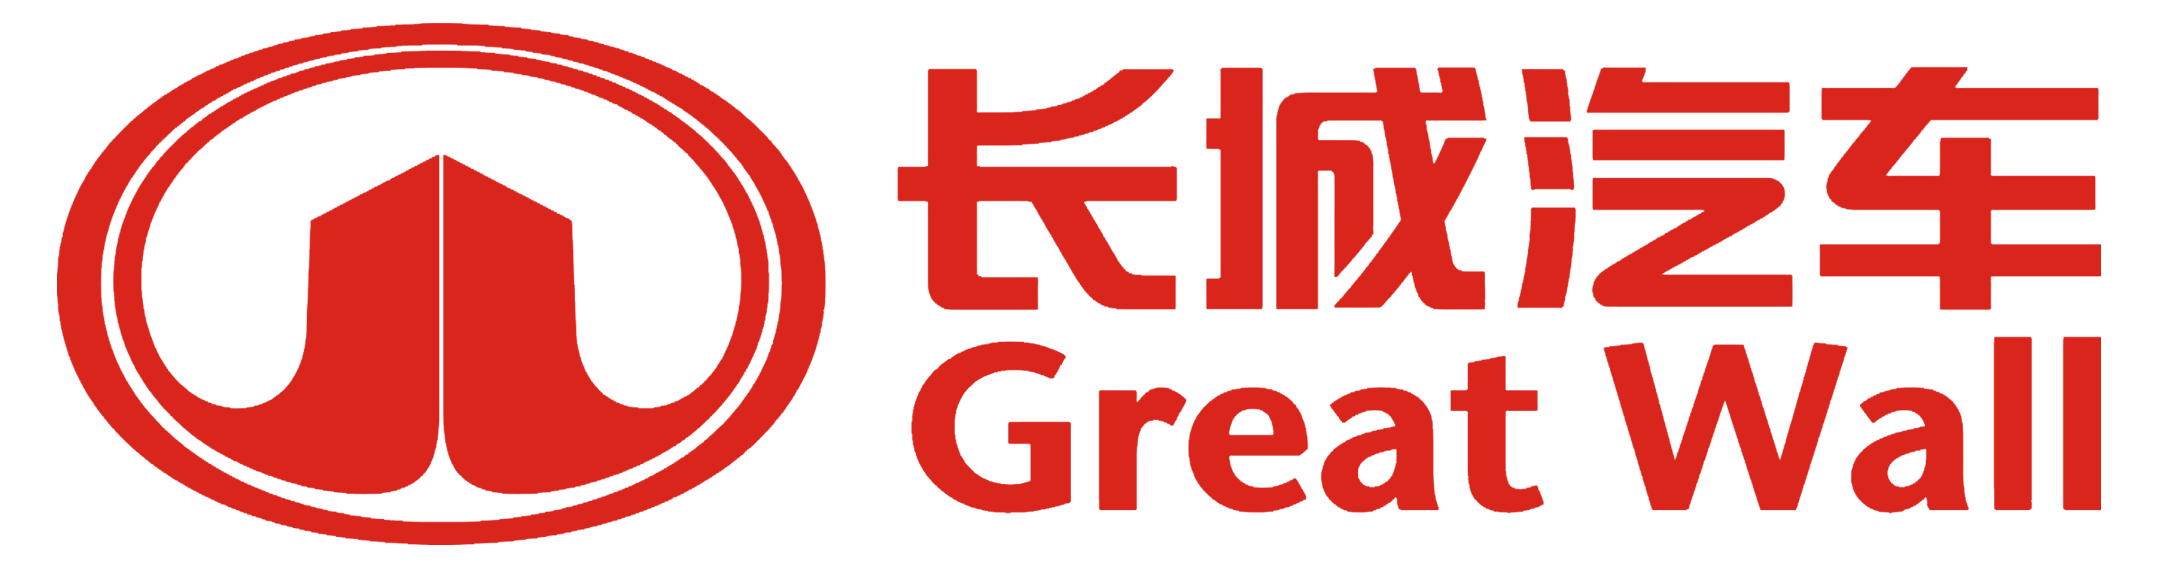 The Great WA Logo - File:Great Wall Motors logo 2.png - Wikimedia Commons